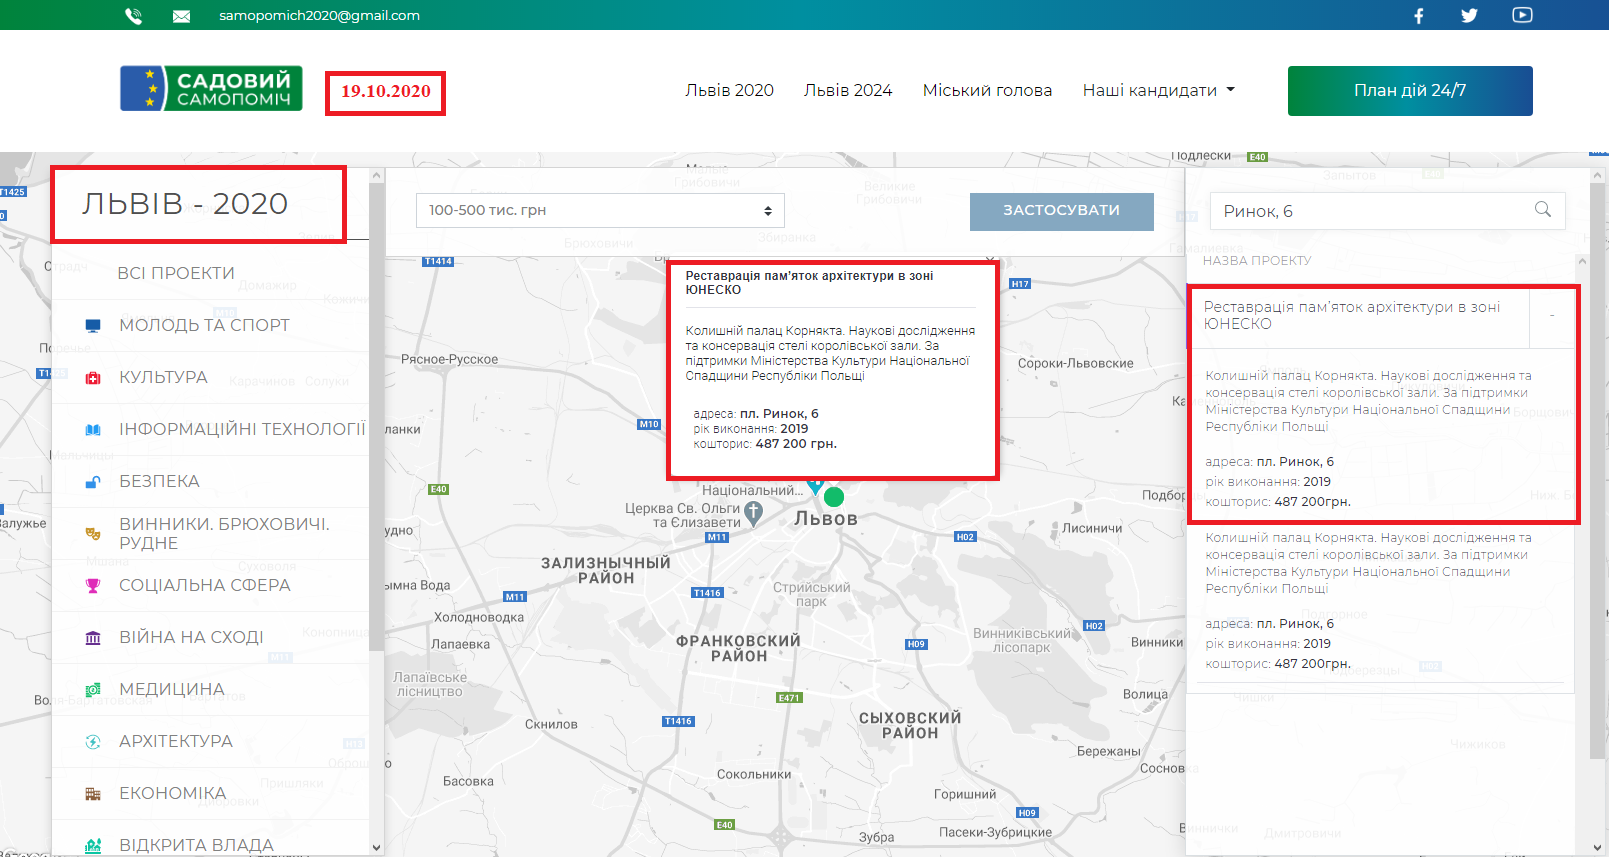 https://lviv2020.com.ua/map/2020?filter=3&search=Ринок,%206